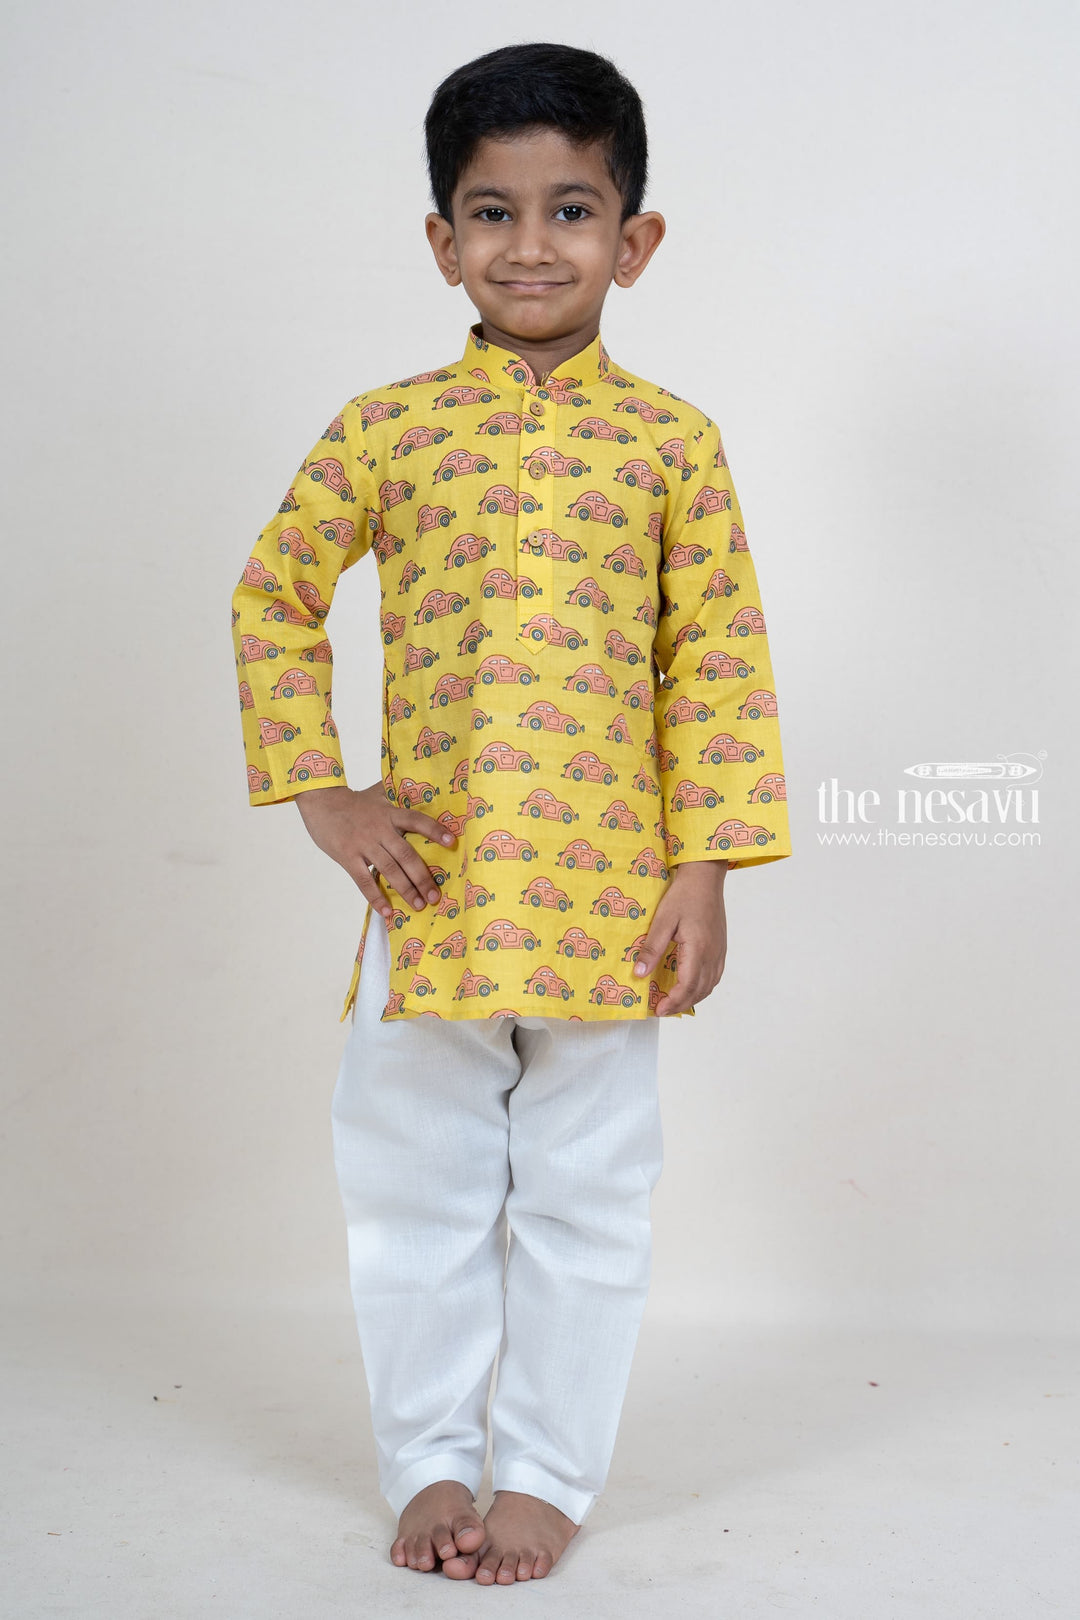 The Nesavu Boys Kurtha Set Bright Yellow Party Wear Printed Kurta Suit For Baby Boys Nesavu 12 (3M) / Yellow / Cotton BES209C-12 Cotton Printed Kurta Suit For Boys Online | Traditional Indian Ethnics | The Nesavu